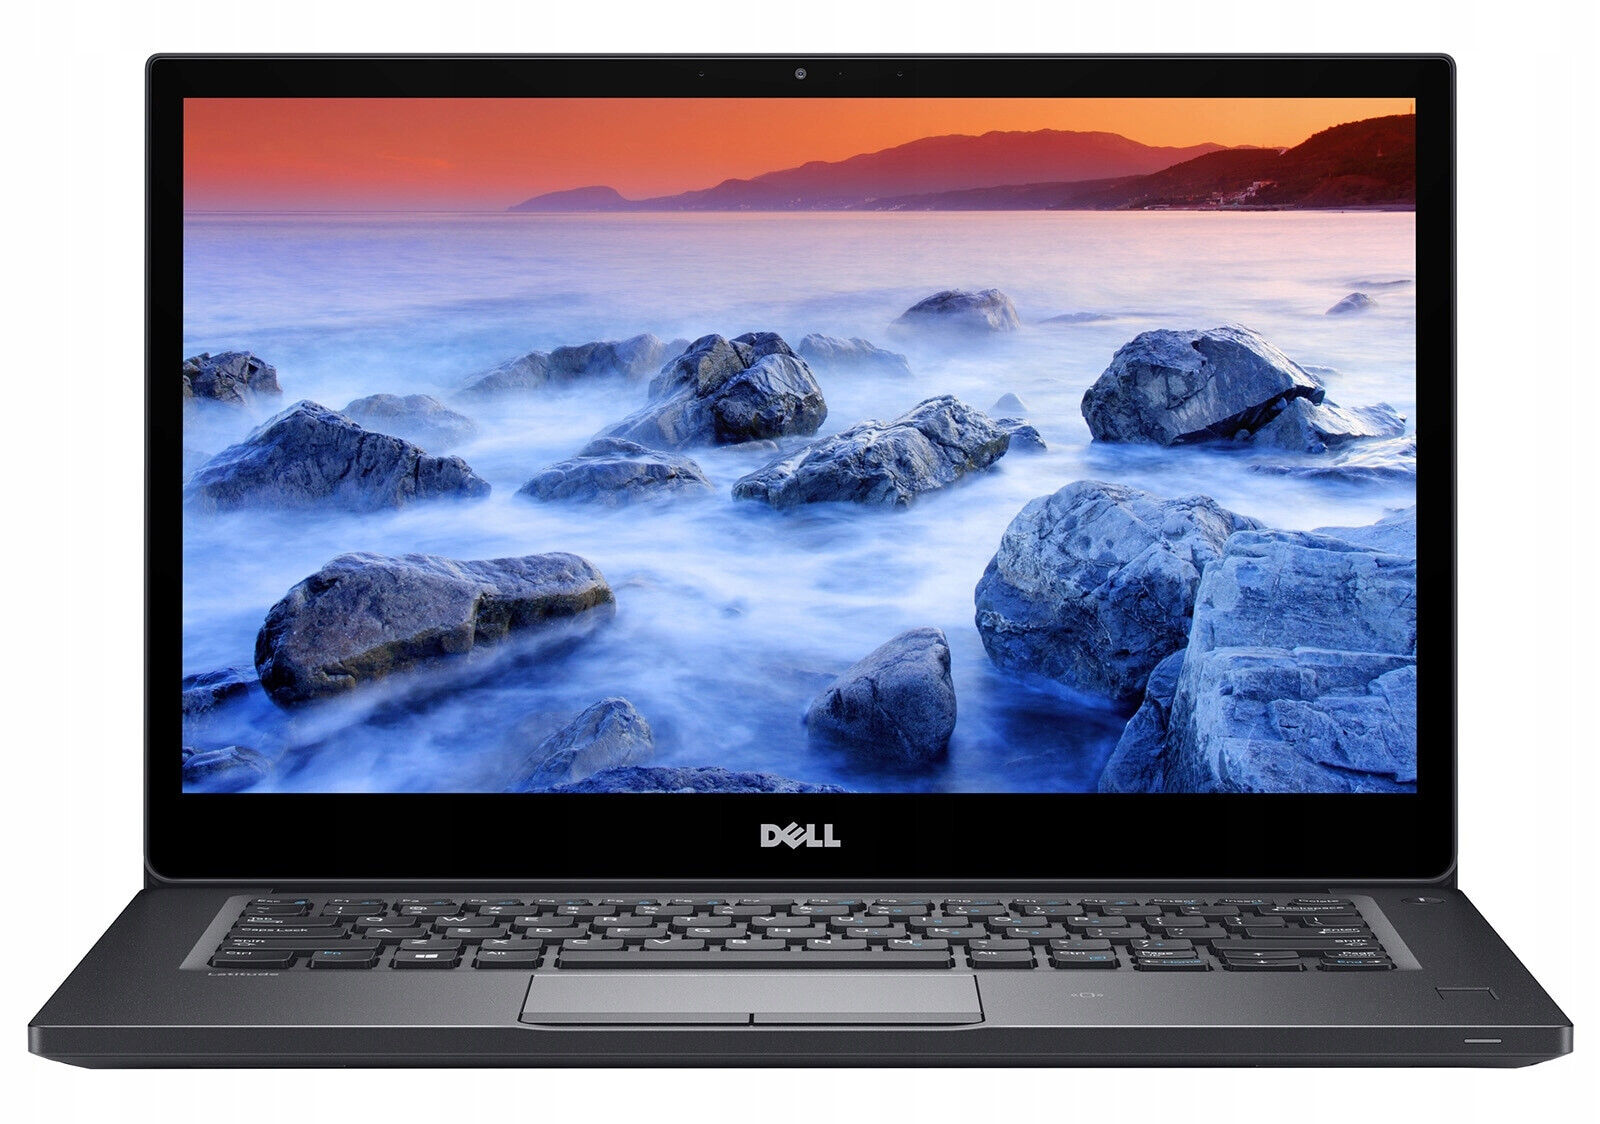 Dell 7490 Laptop Linux Mint Quad Core 32GB 1TB SSD + 5 YEAR WARRANTY